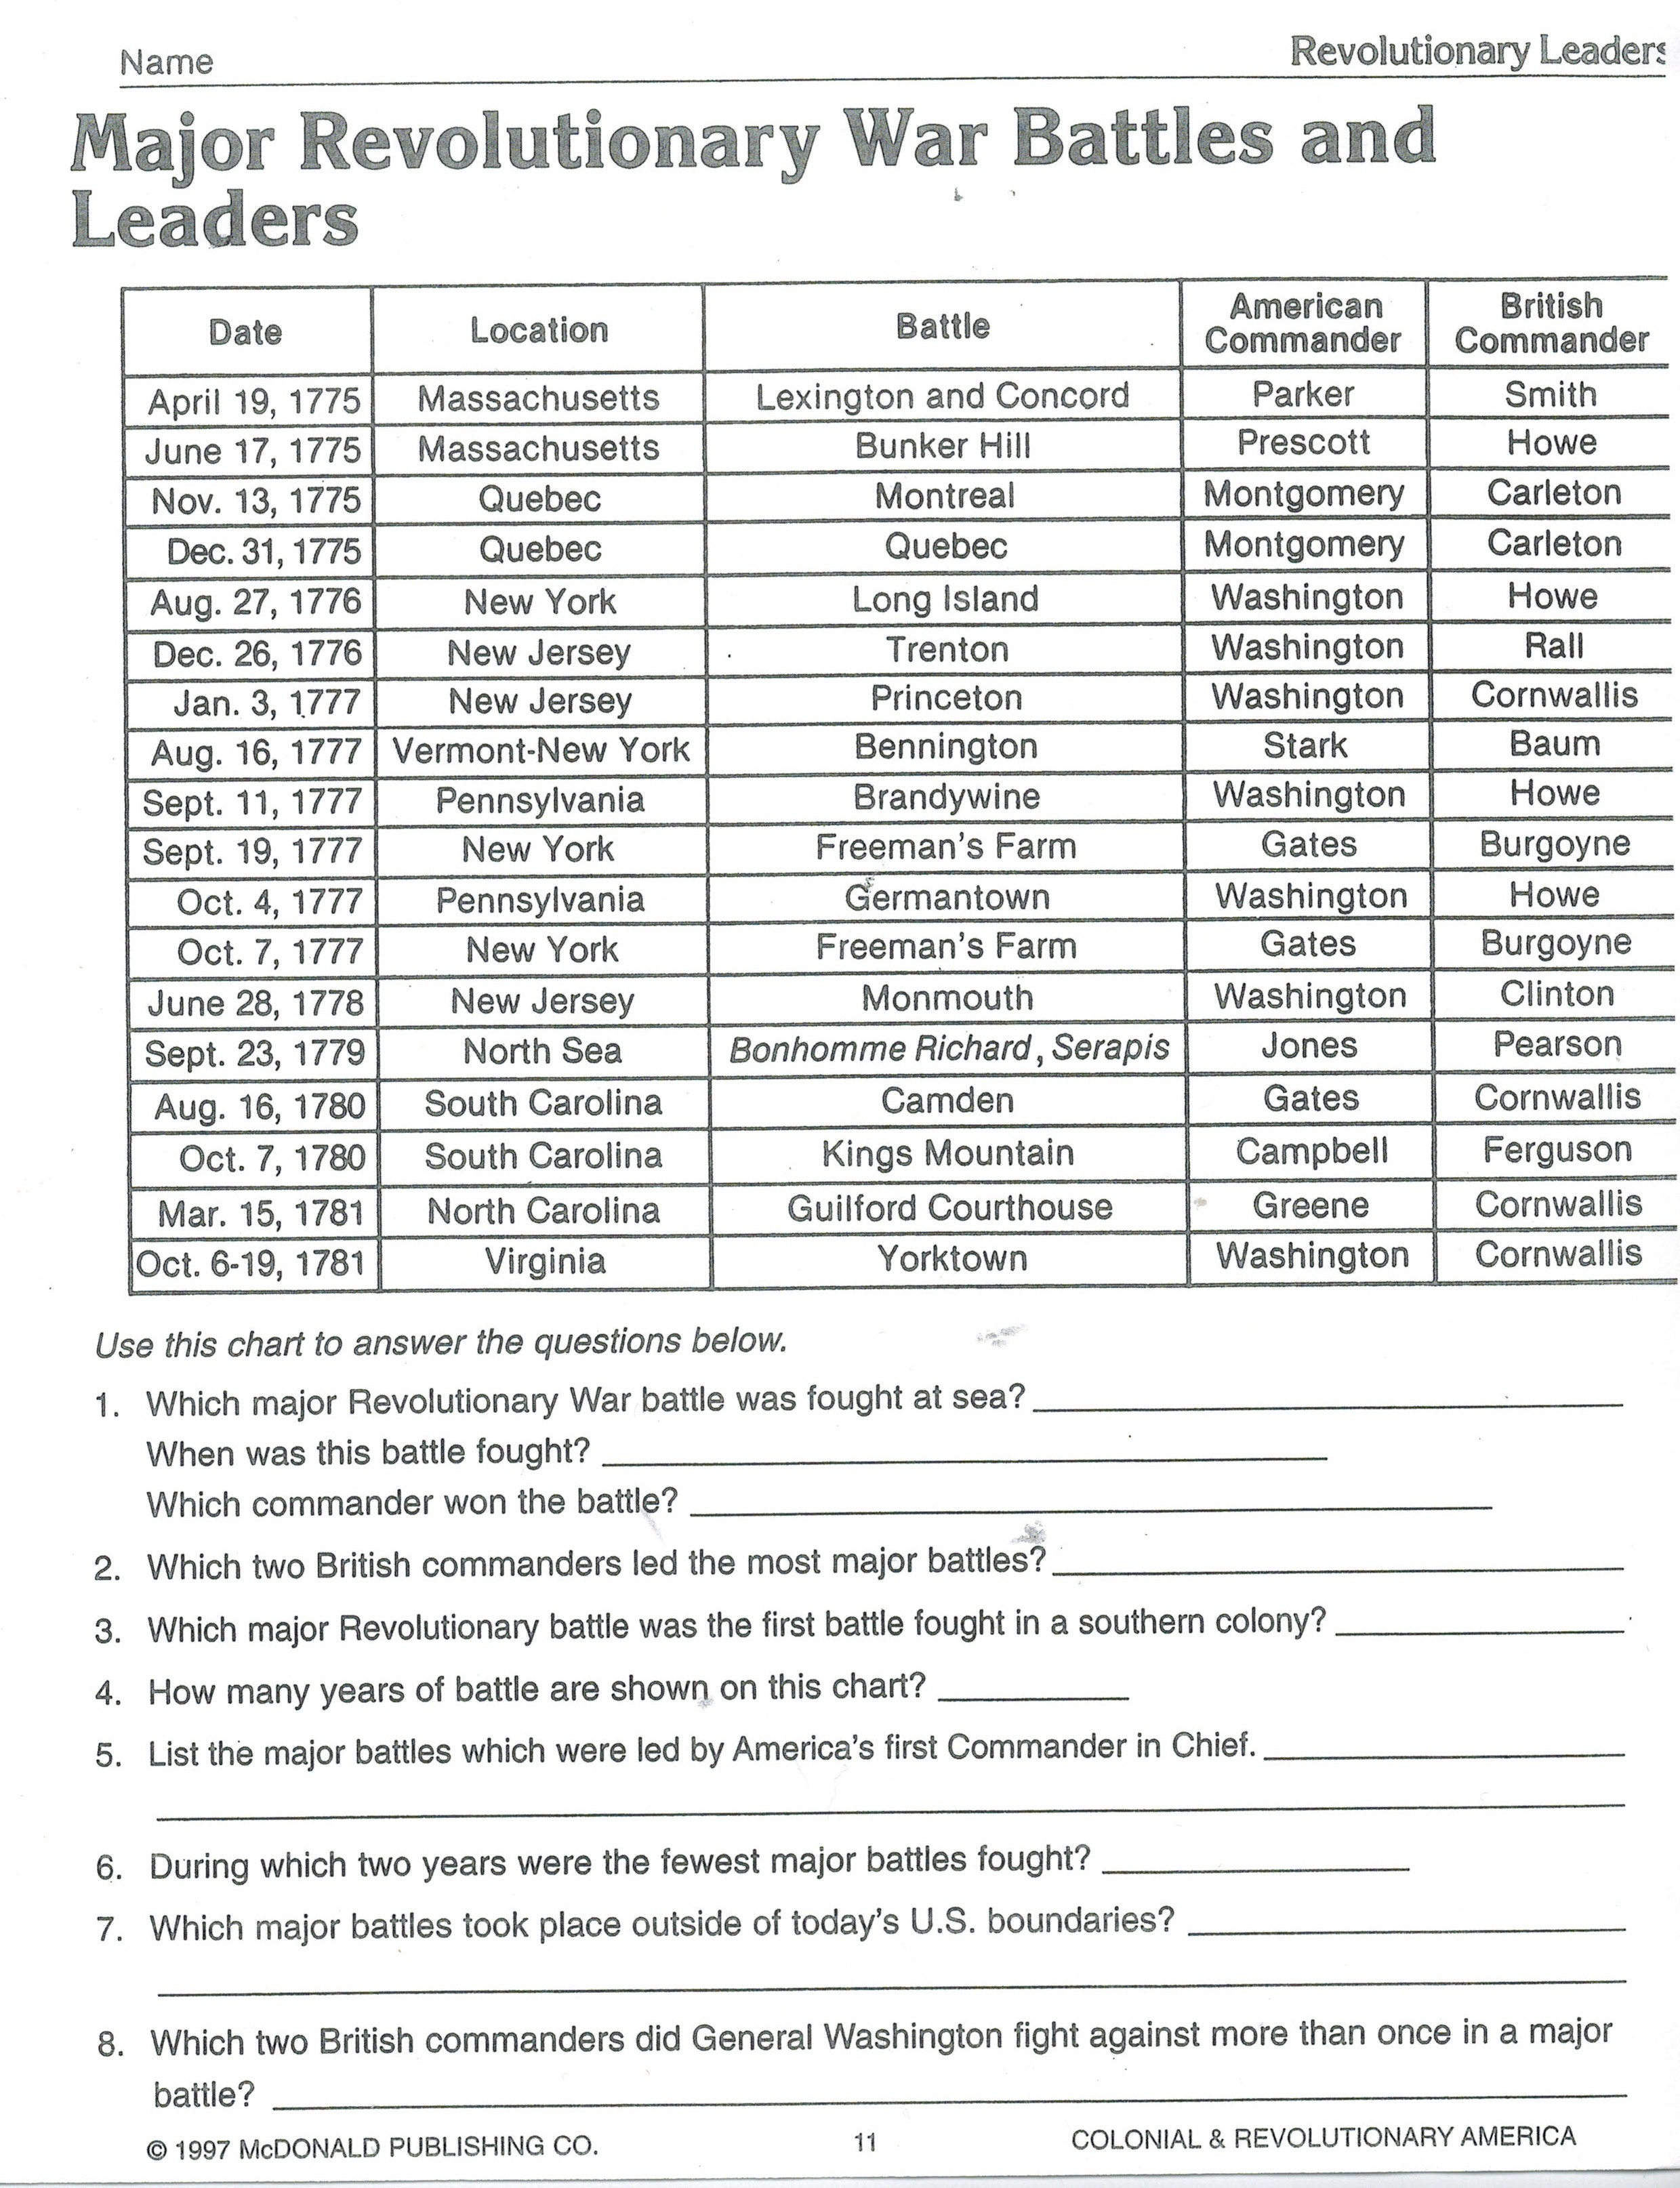 Social Studies Worksheet 1st Grade Homework Help 5th Grade social Stu S